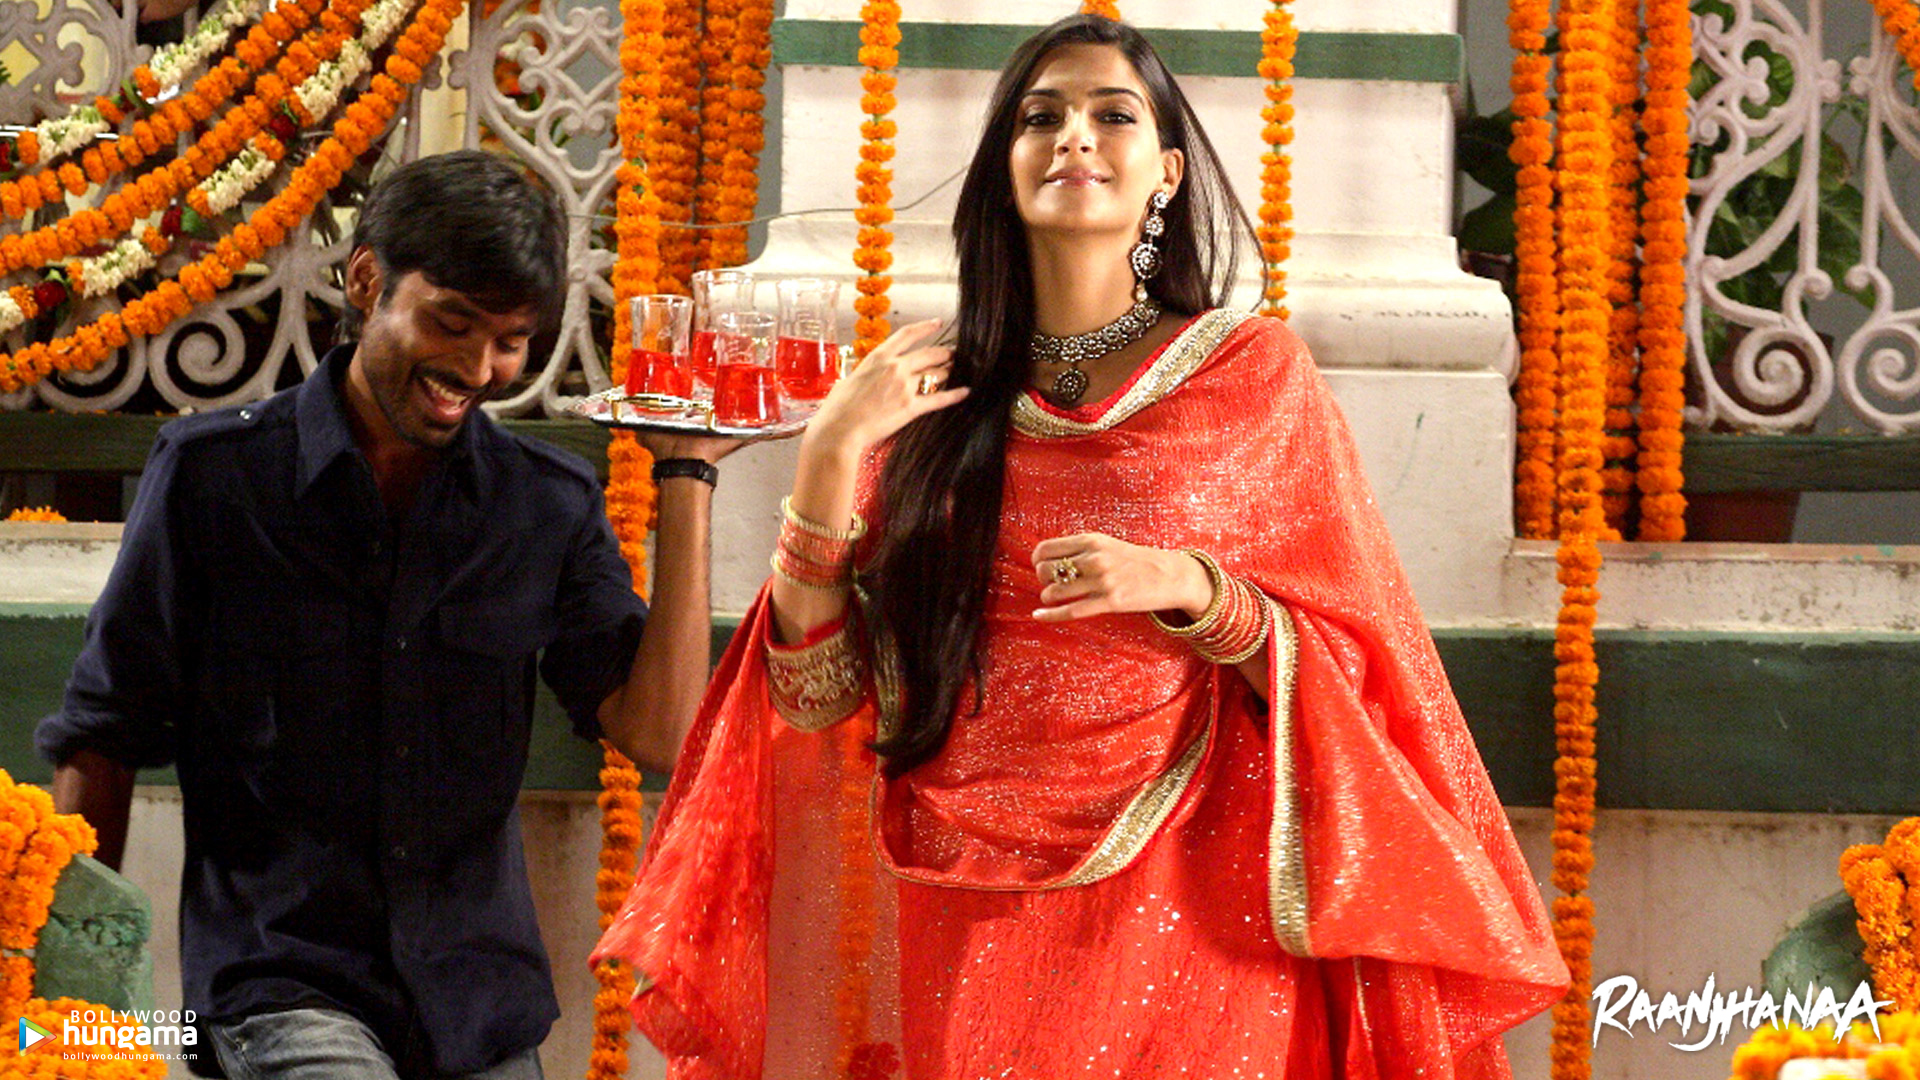 Critics review Raanjhanaa: watch it for performances, first half |  Bollywood - Hindustan Times